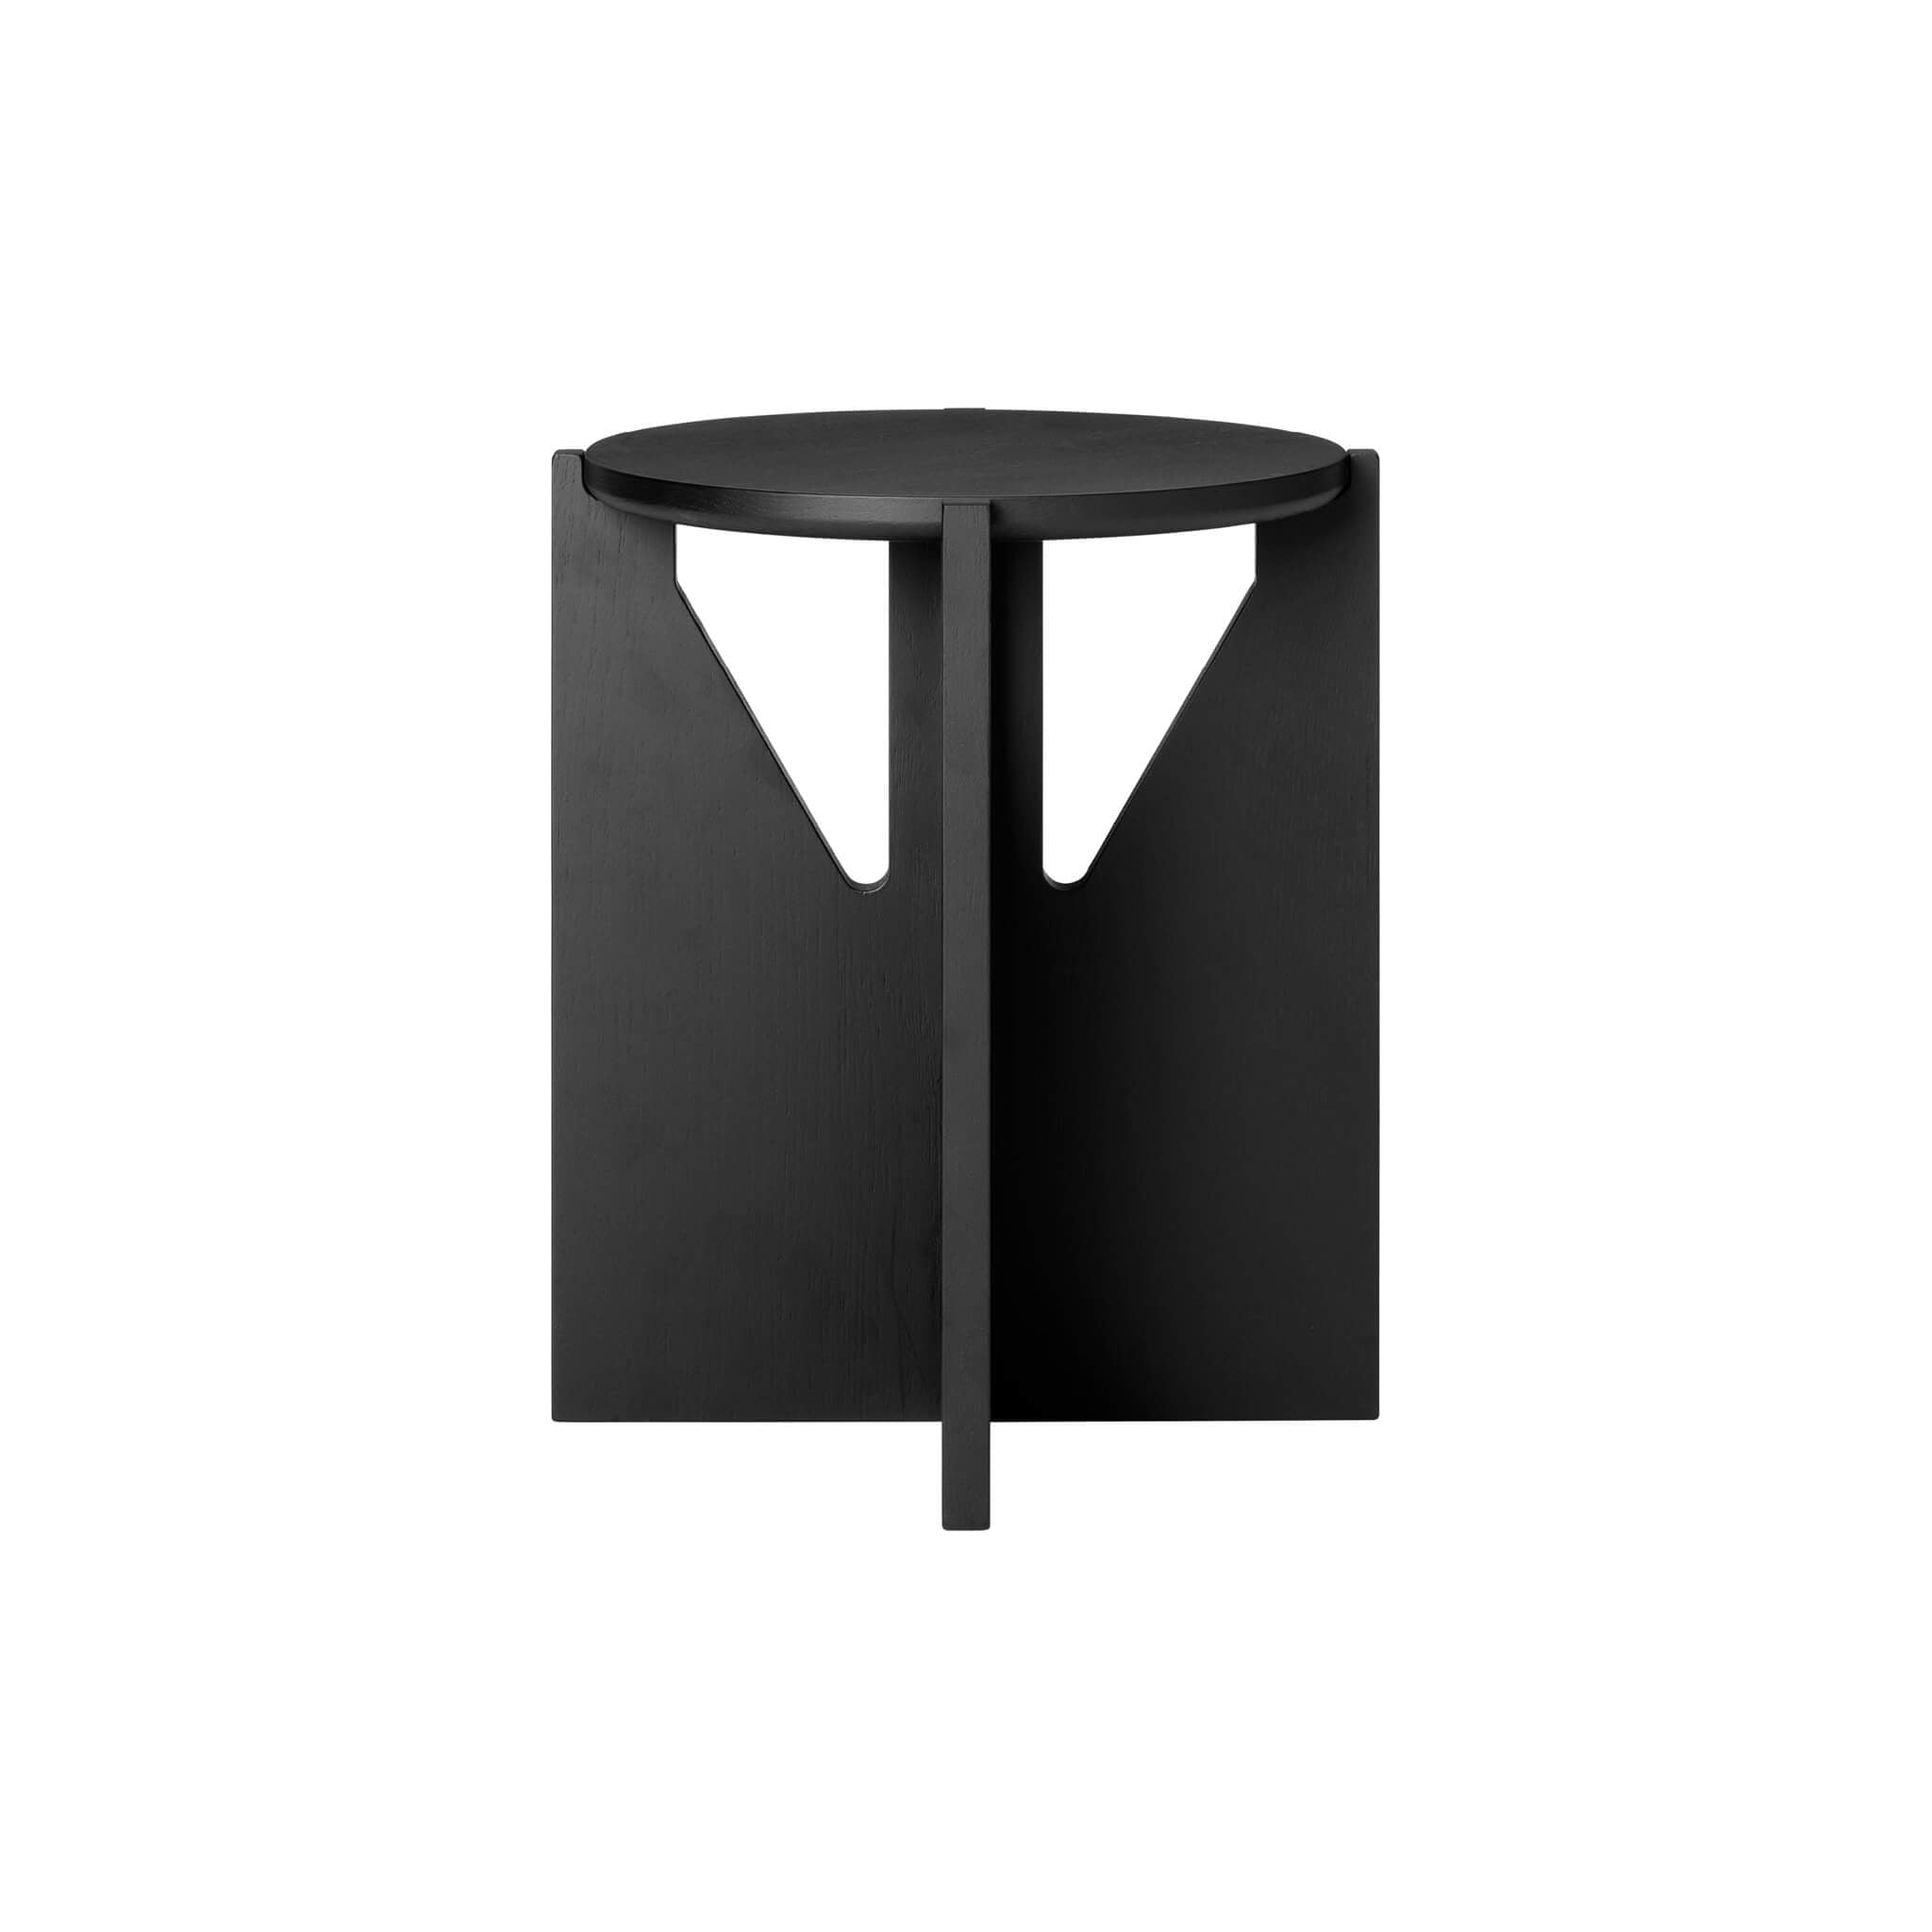 Kristina Dam Studio stool black buy